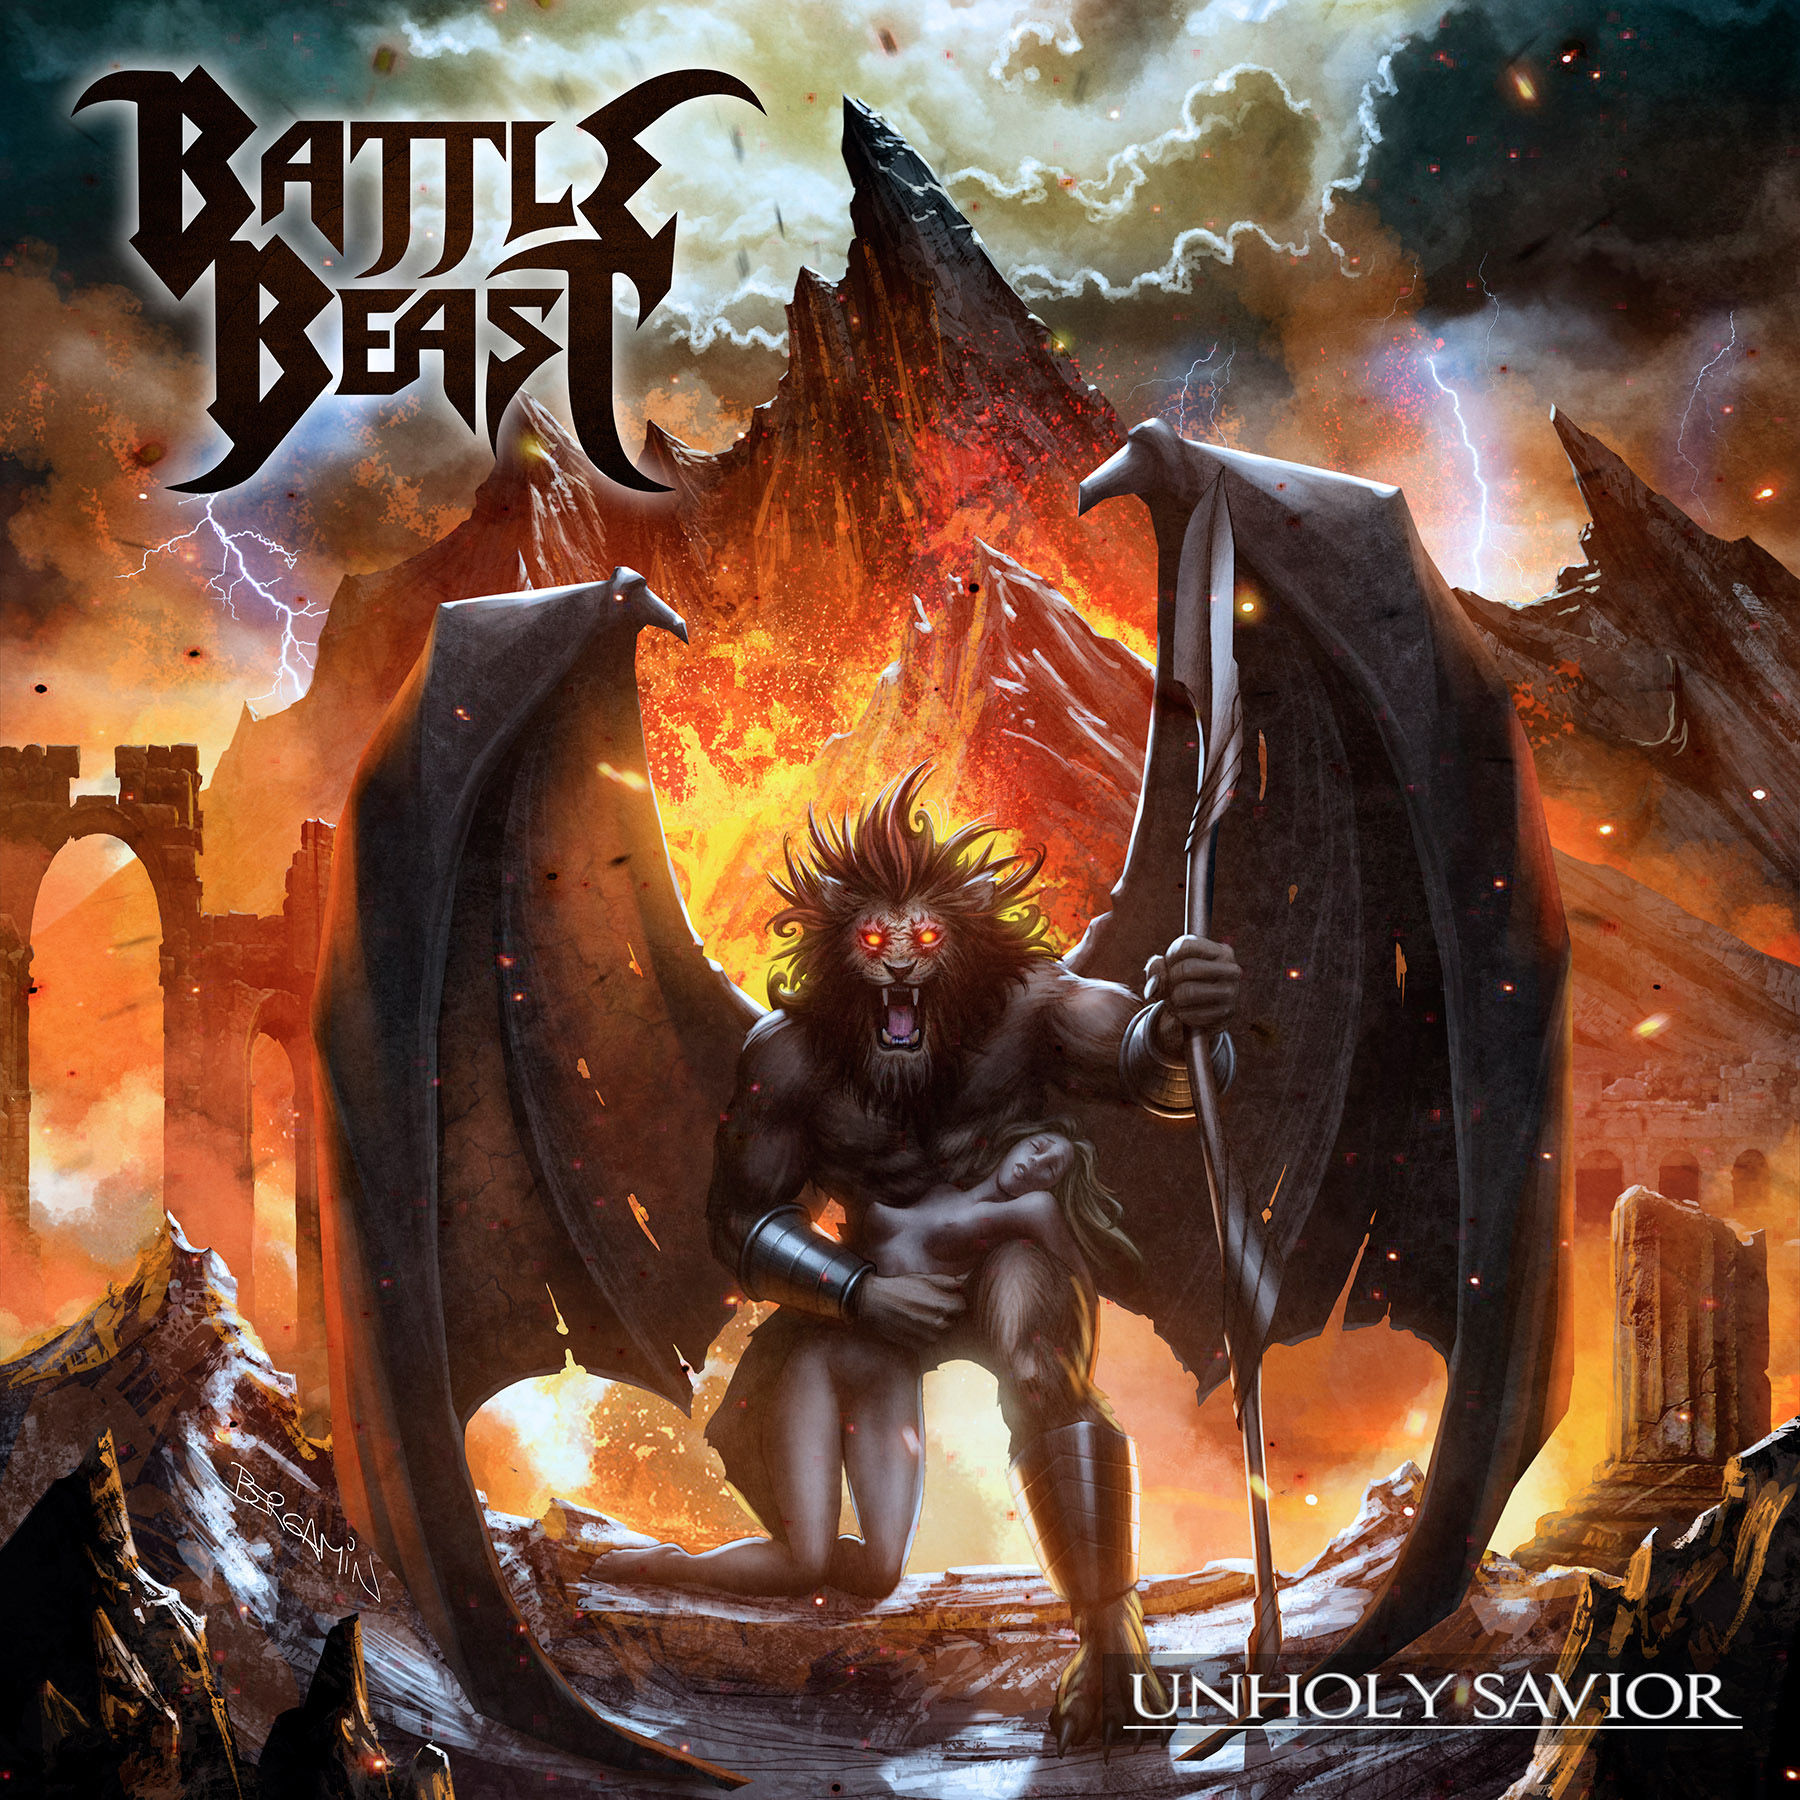 Critique d’Album: Battle Beast – Unholy Savior